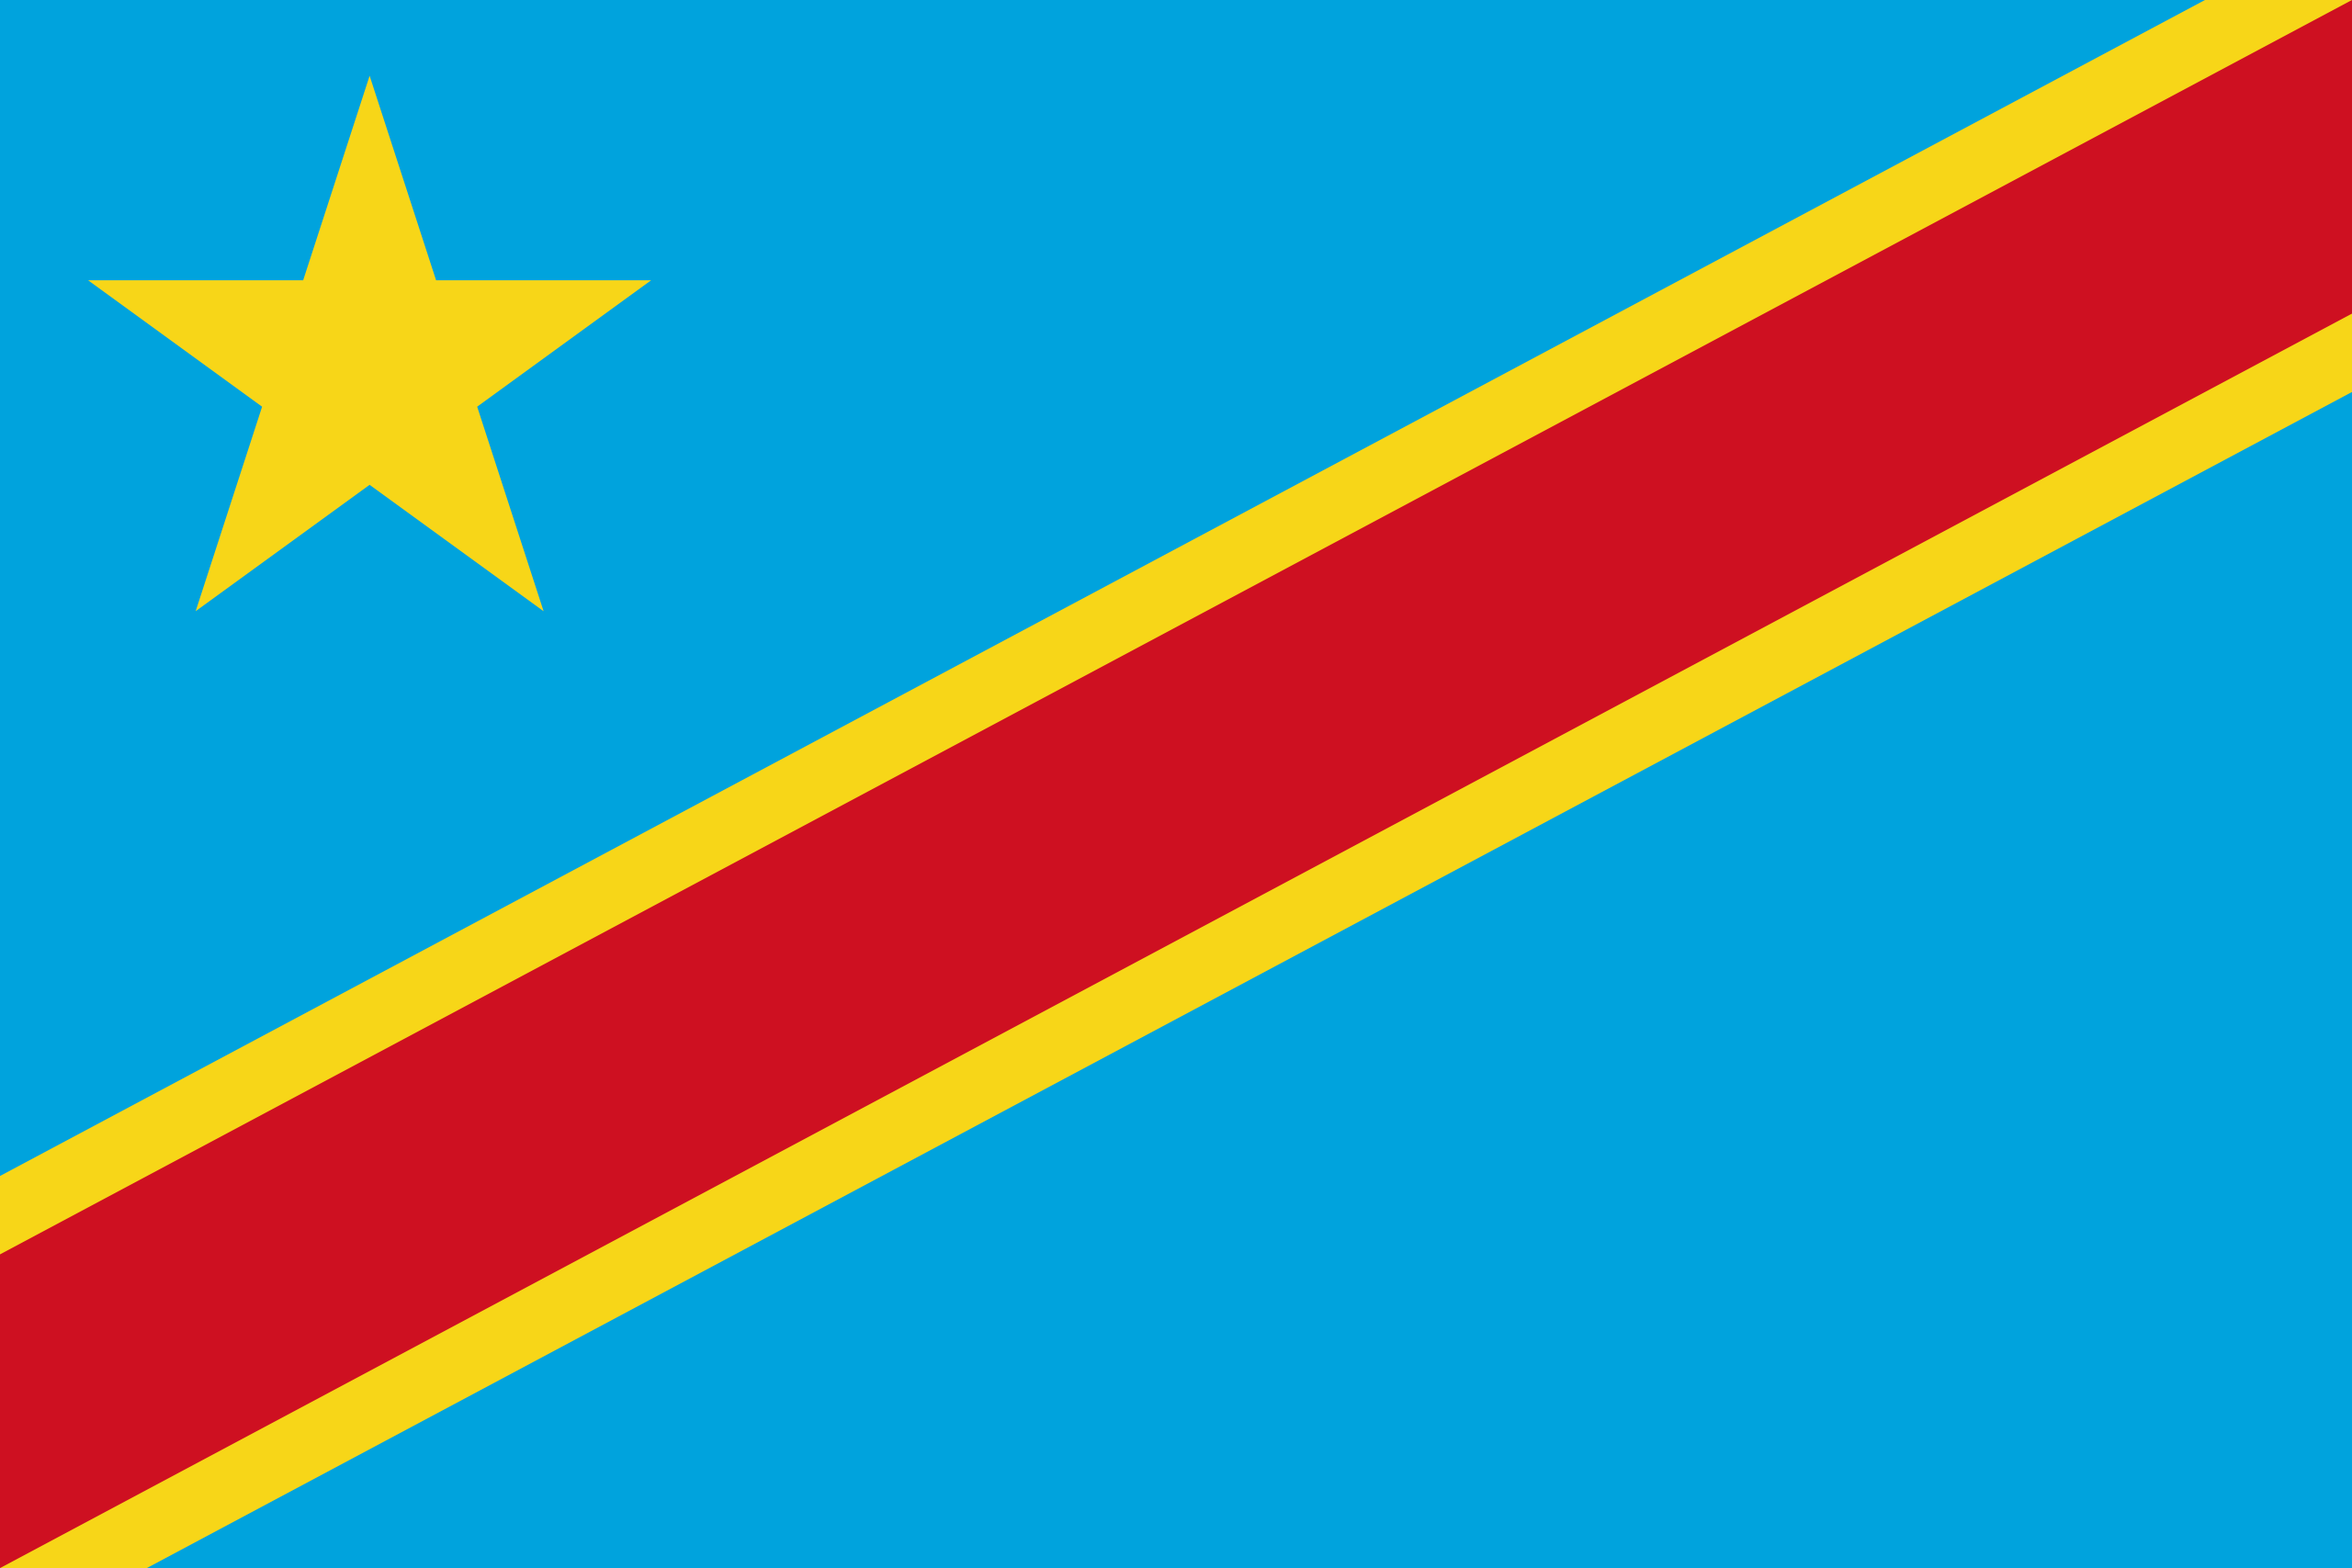 Democratic Republic of the Congo's flag